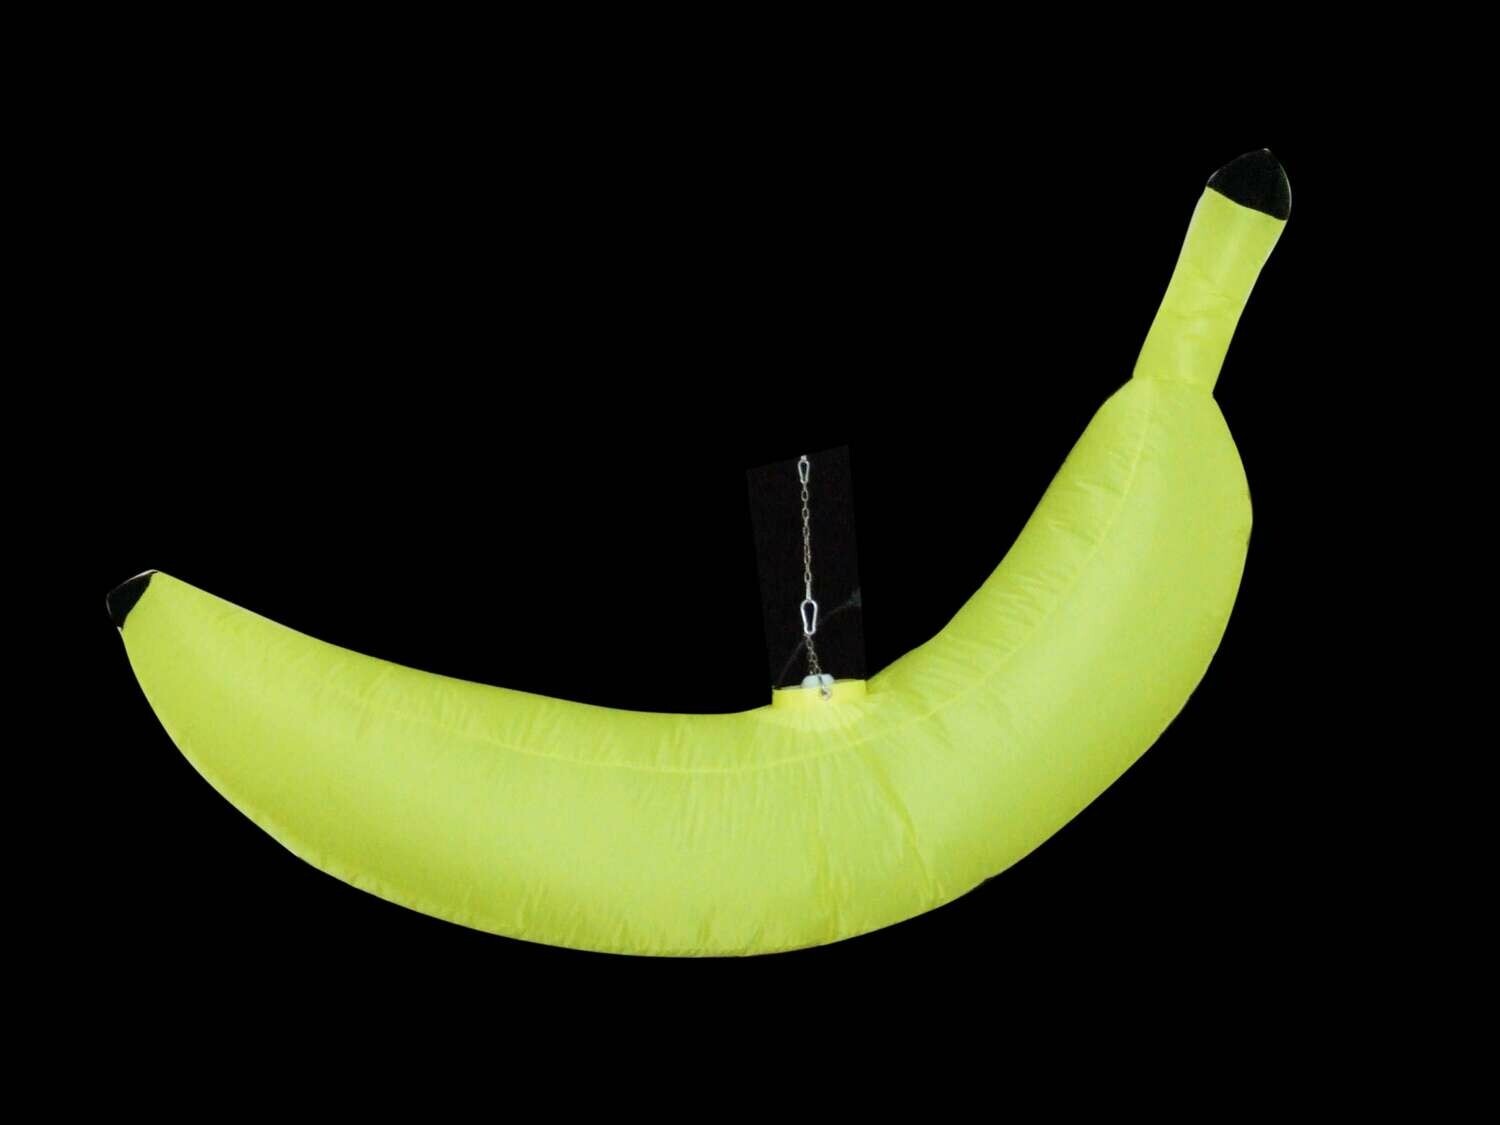 Hanging Inflatable 3D Banana 7ft/214cm Long